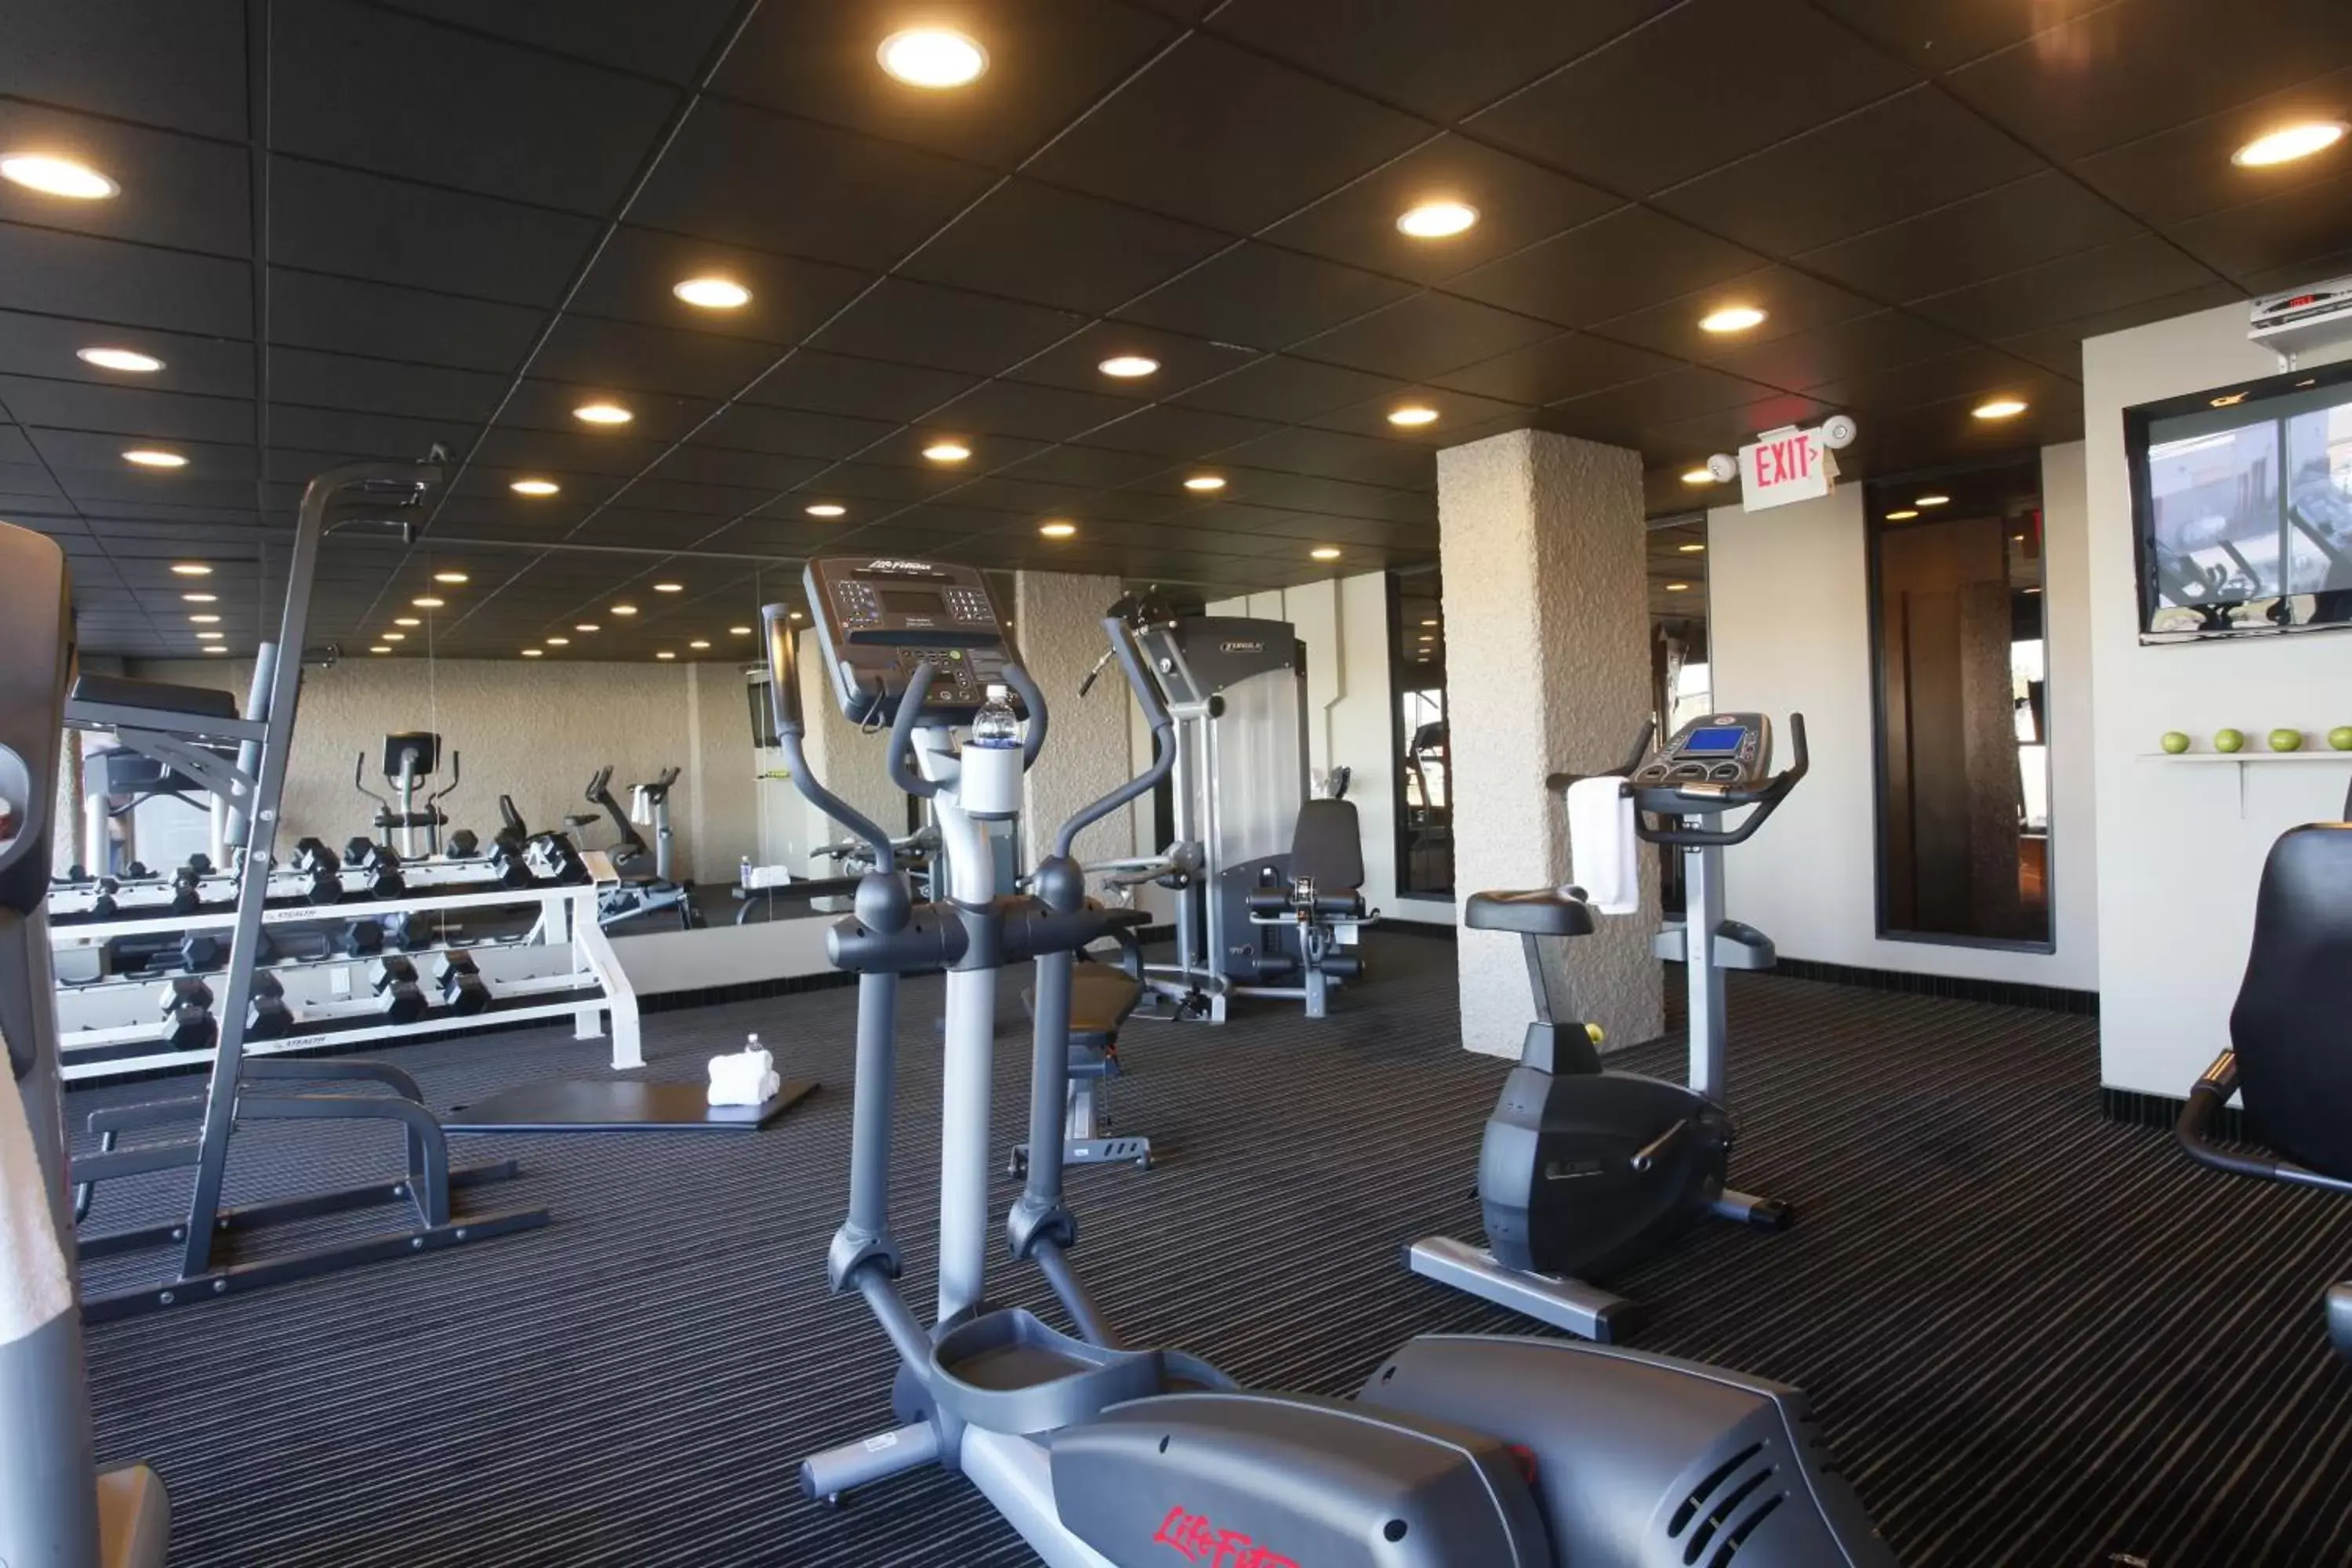 Fitness centre/facilities, Fitness Center/Facilities in Radisson Hotel Fort St John